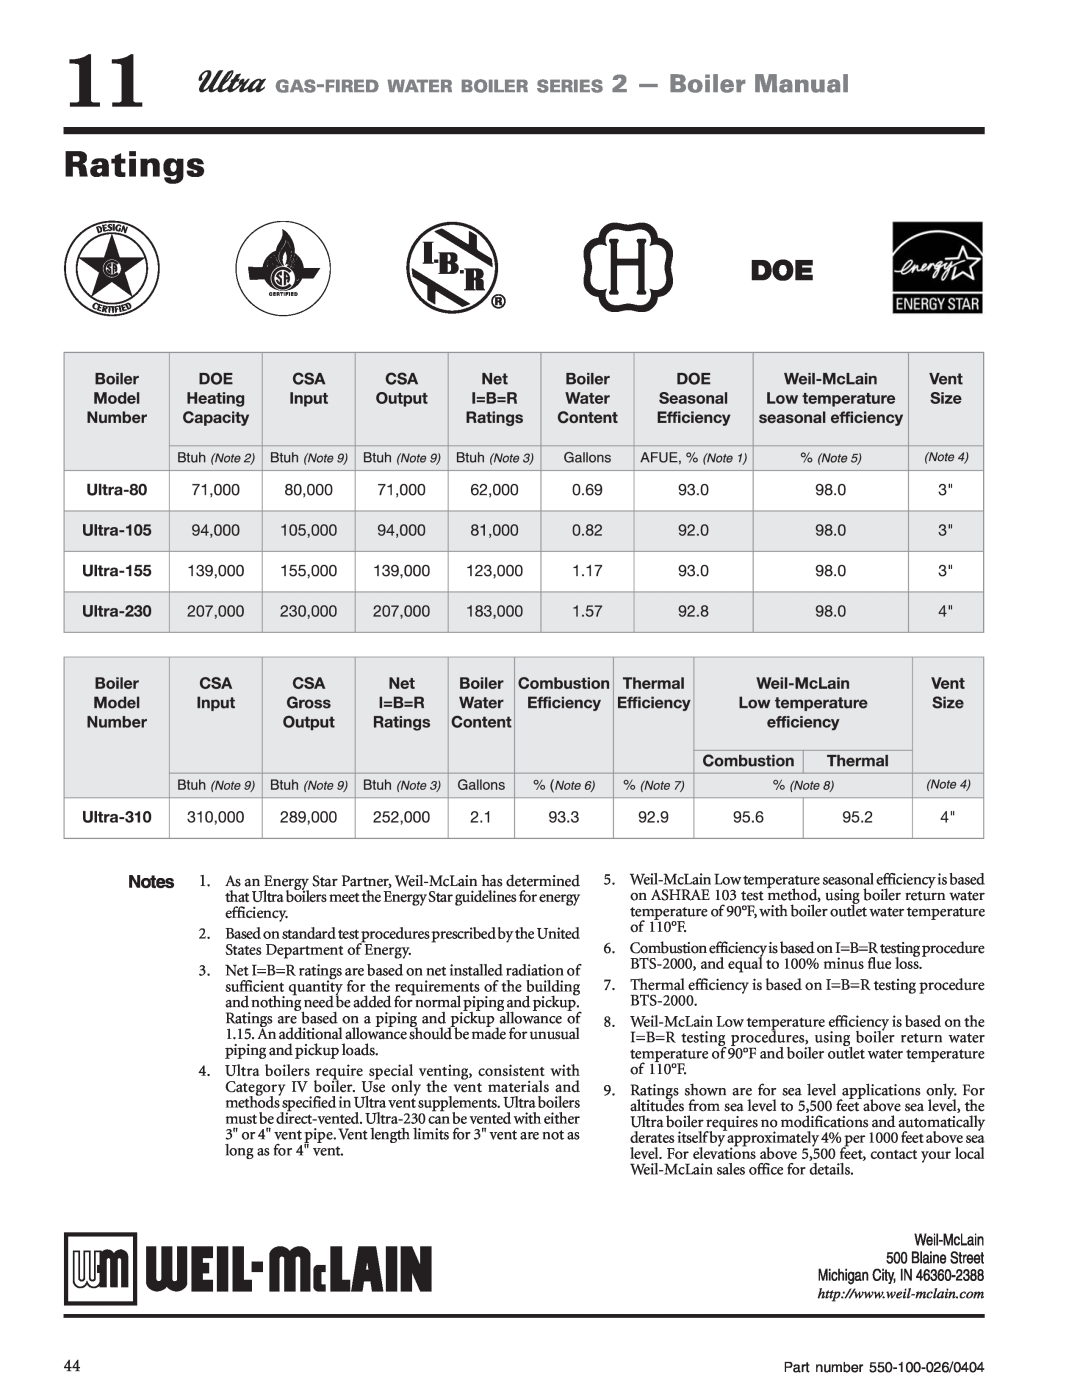 Ultra electronic 105, 80, 230 & -310, 155 manual Ratings, GAS-FIREDWATER BOILER SERIES 2 - Boiler Manual 